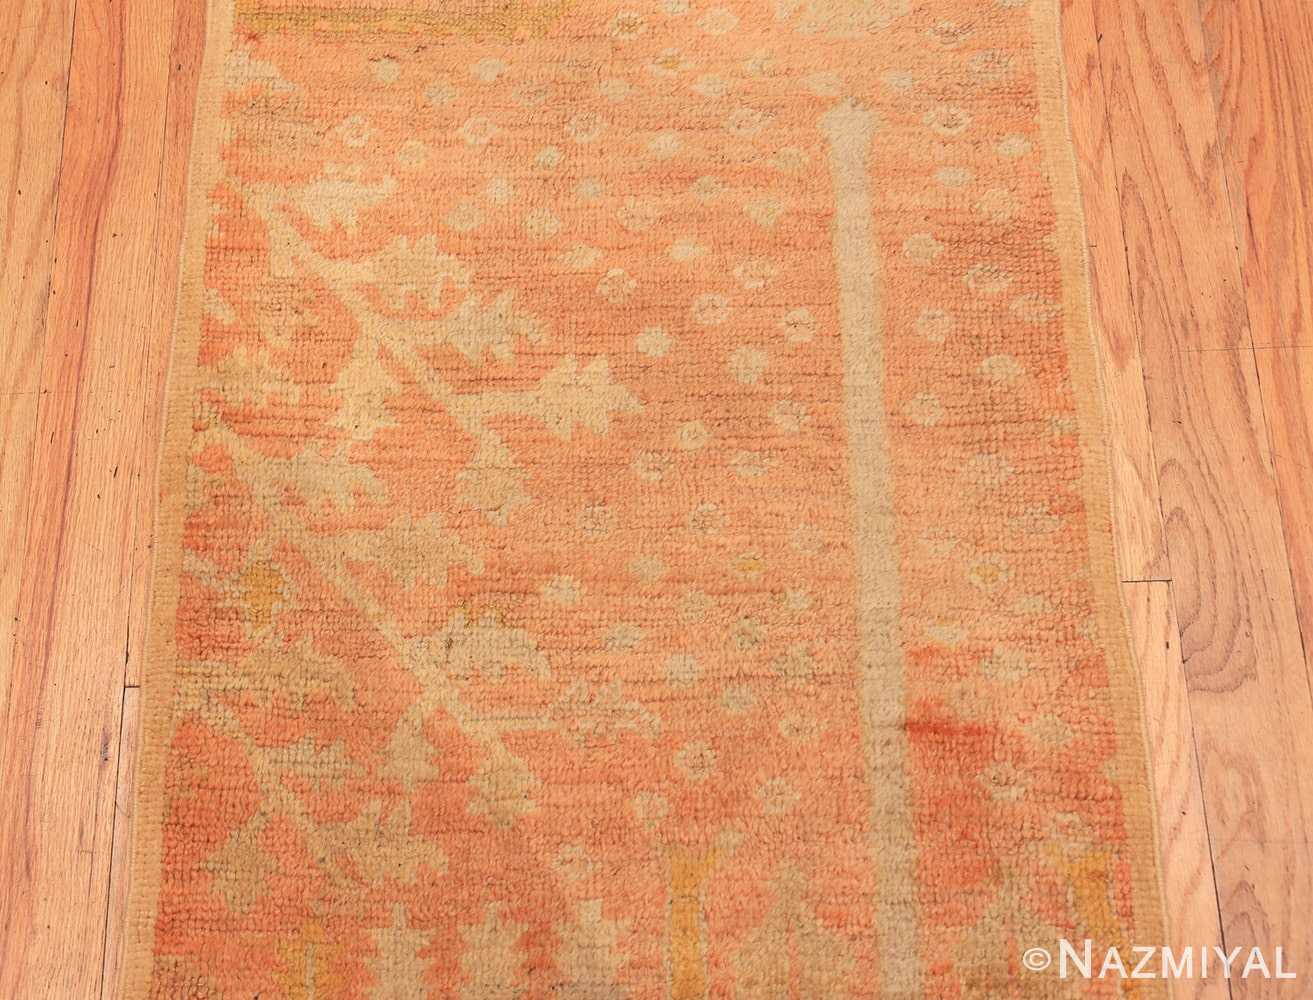 Field antique Turkish Oushak runner rug 70223 by Nazmiyal